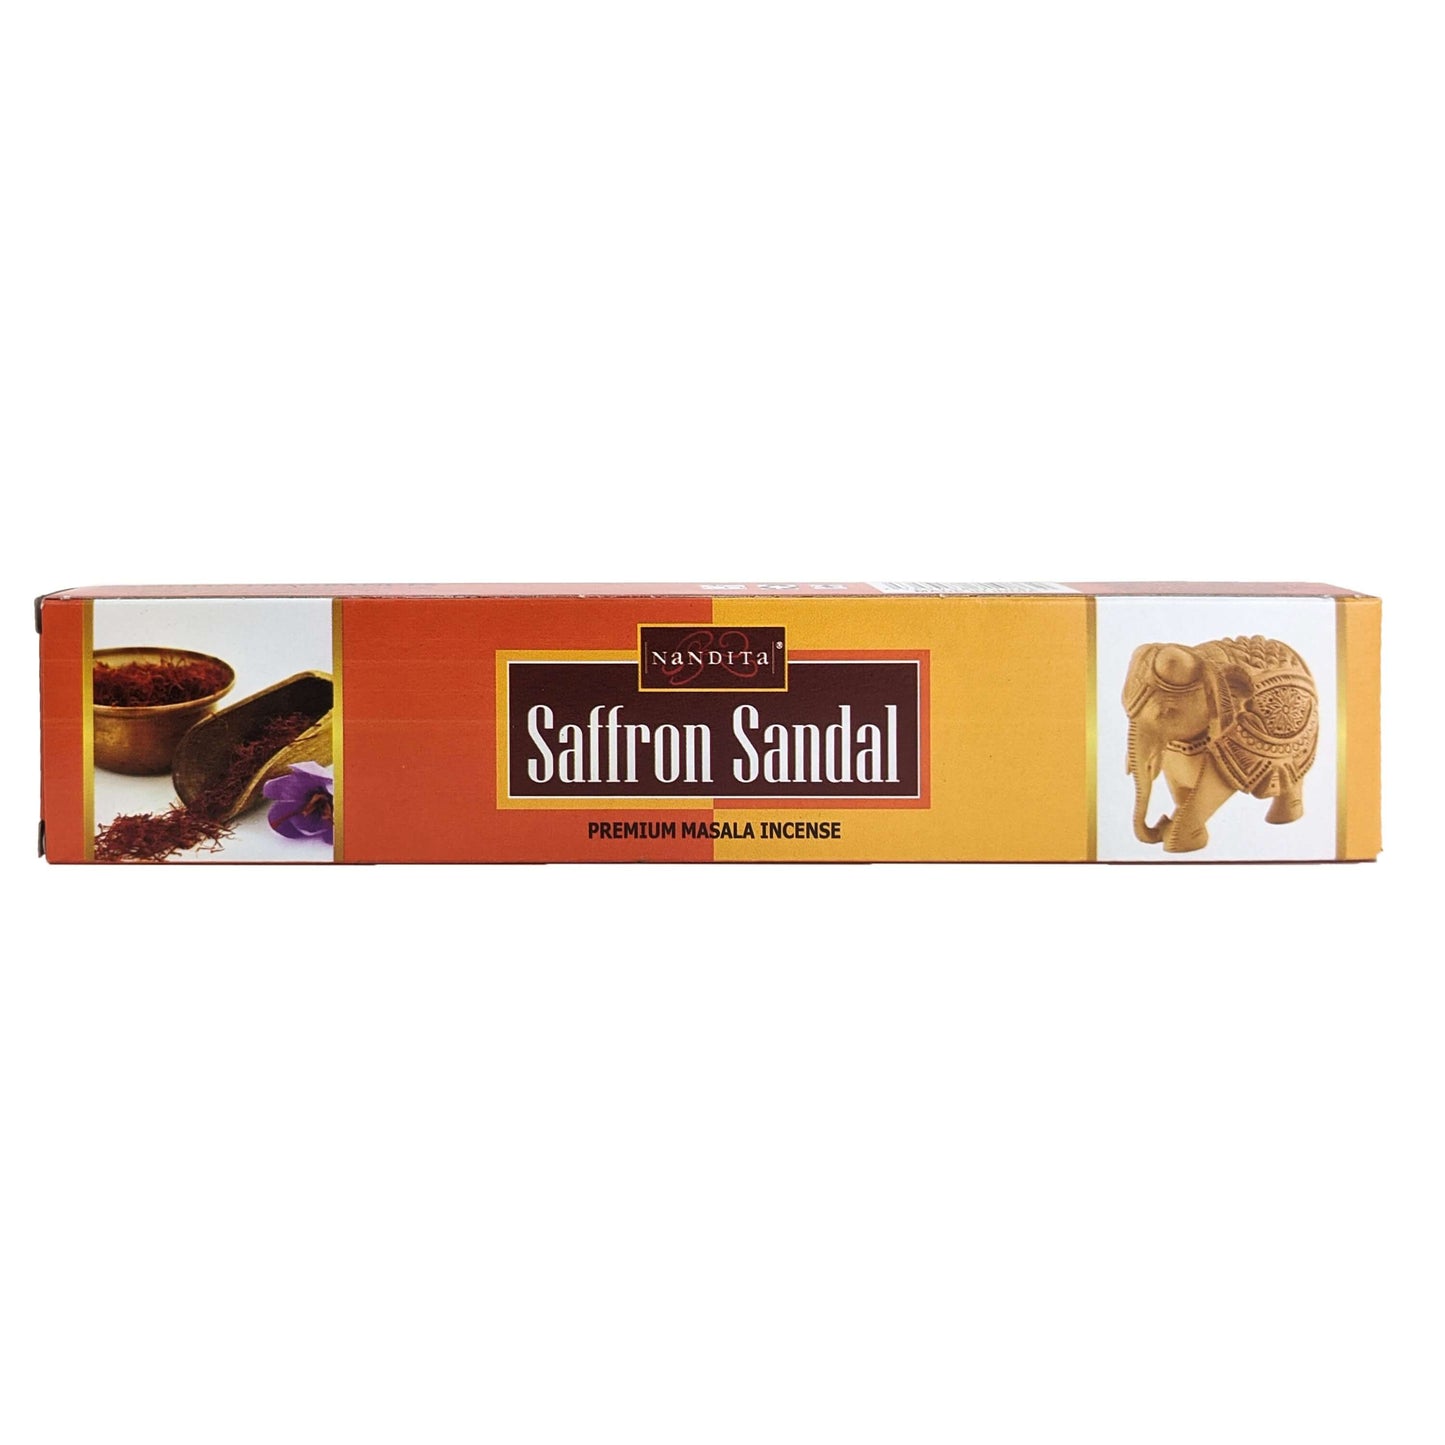 Nandita Saffron Sandal Incense Sticks, 15g Pack